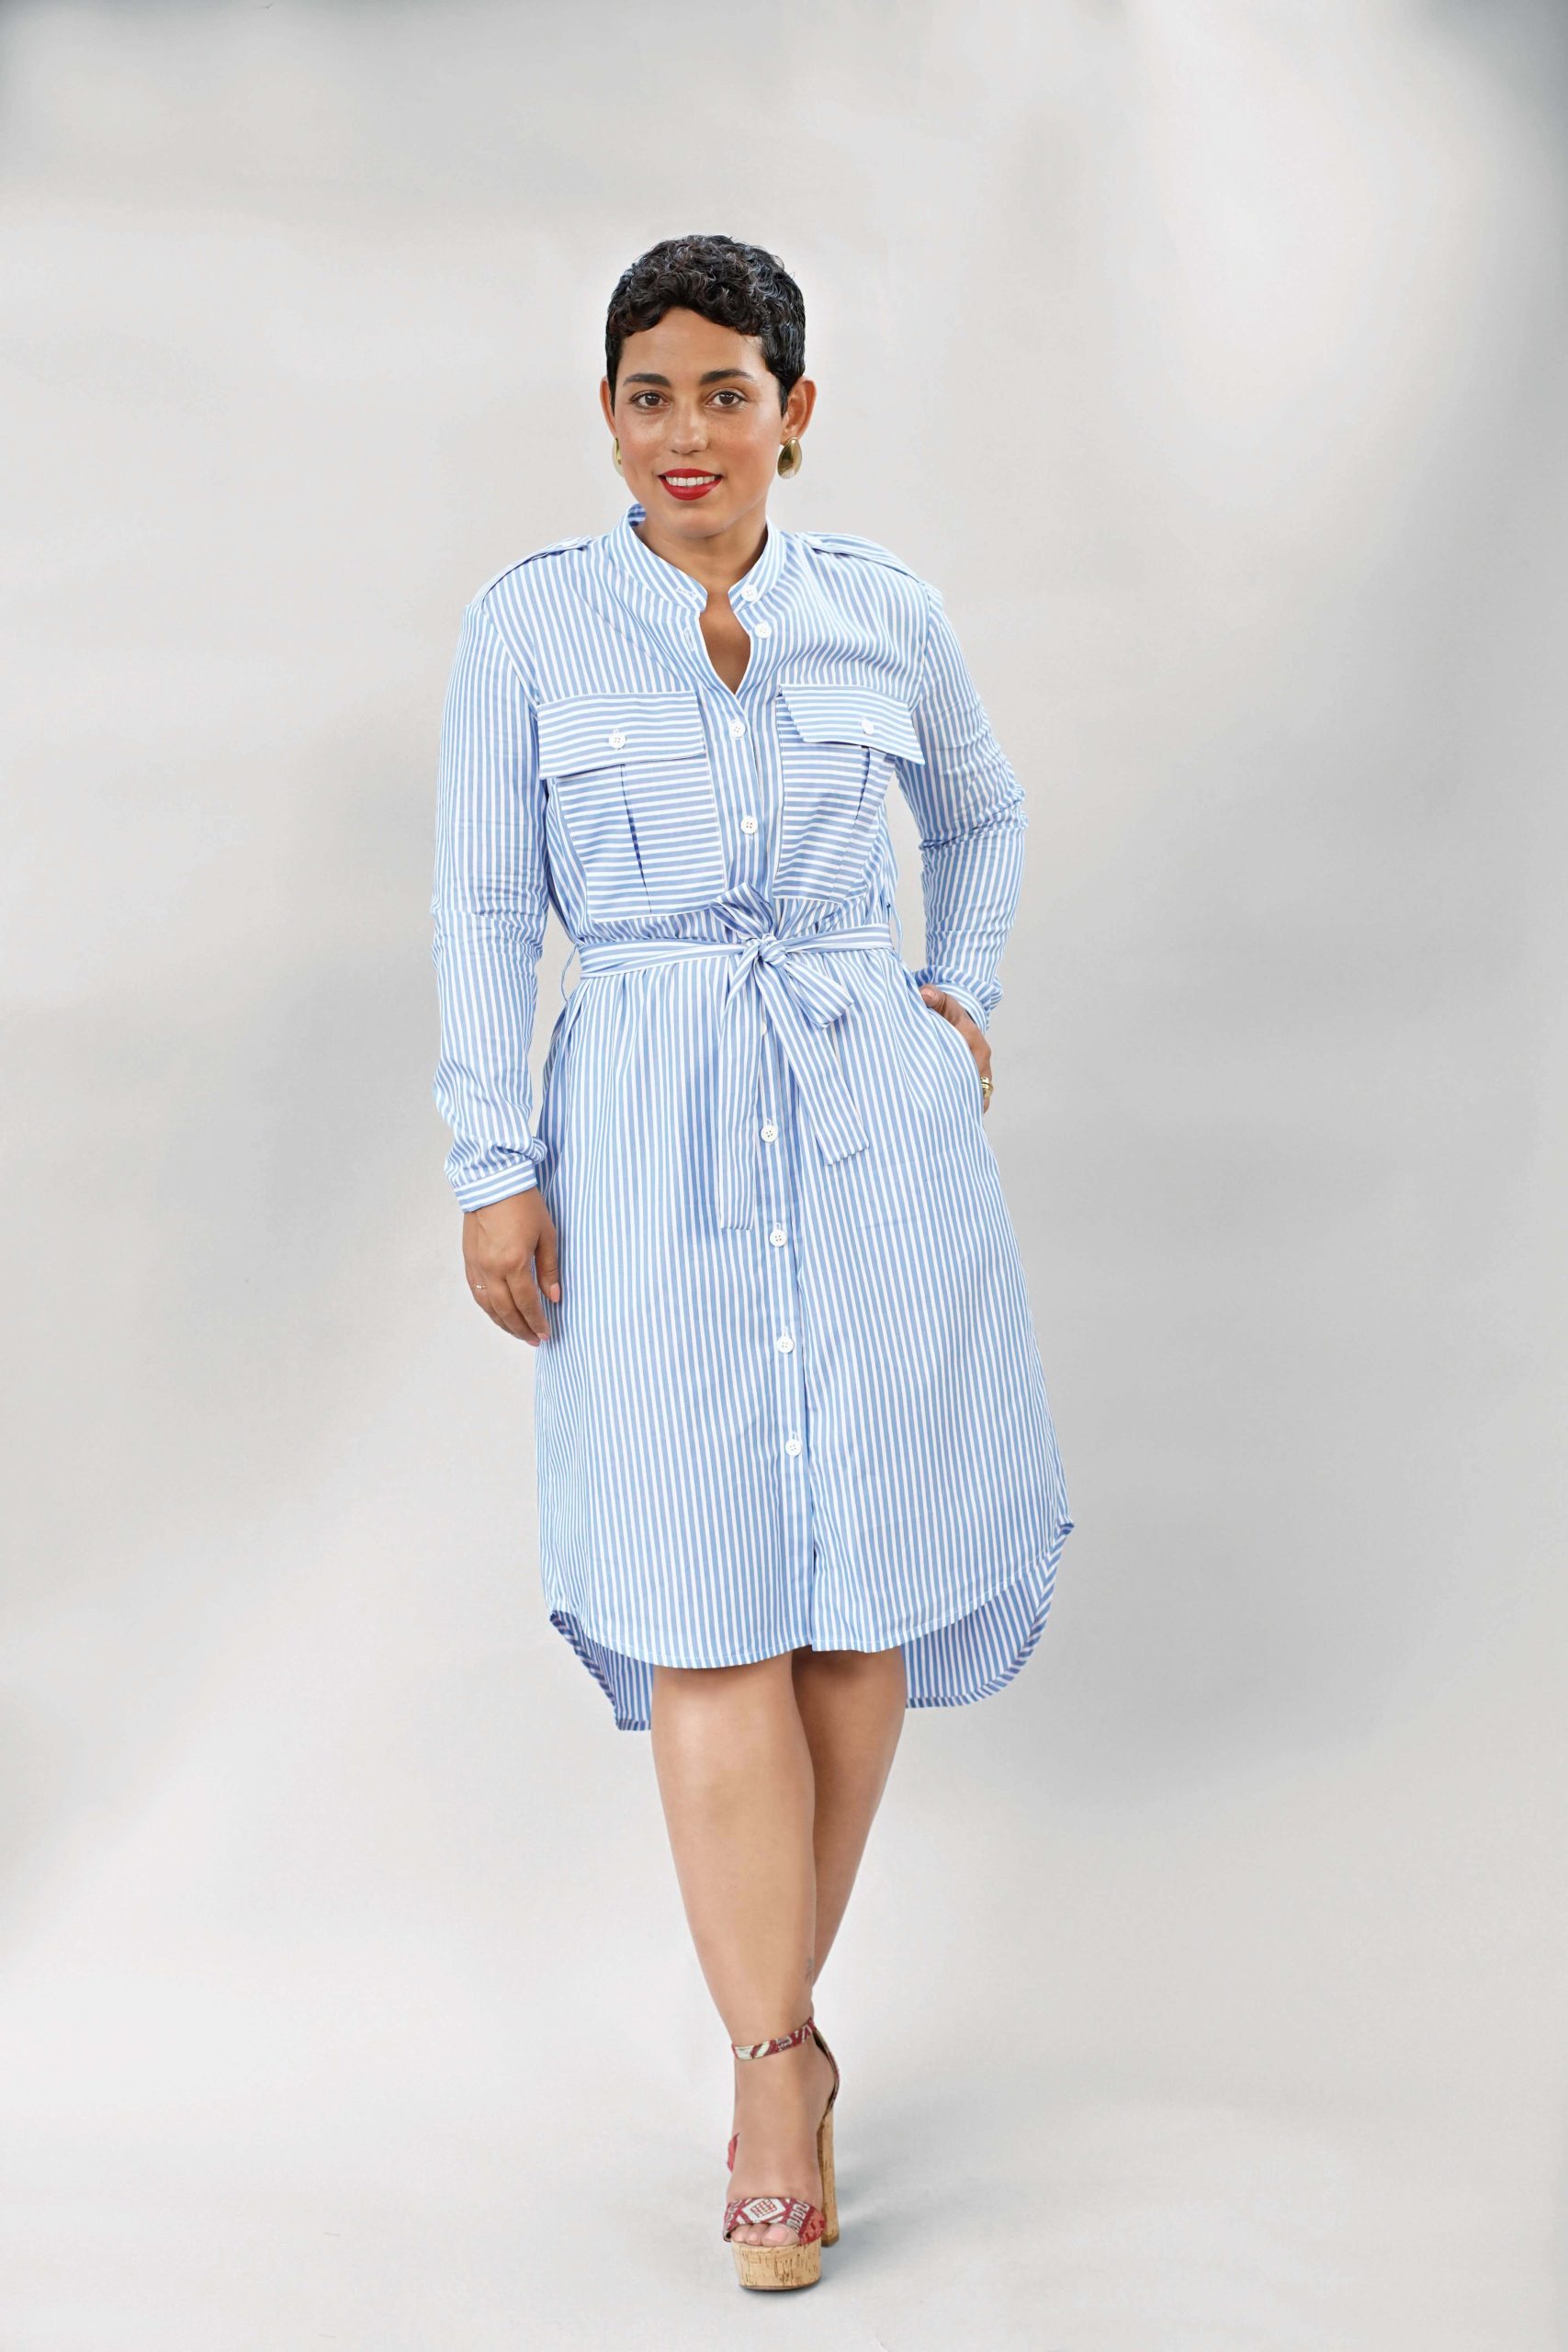 Pattern S8830 Mimi G Misses'/Miss Petite Shirt Dress or Tunic